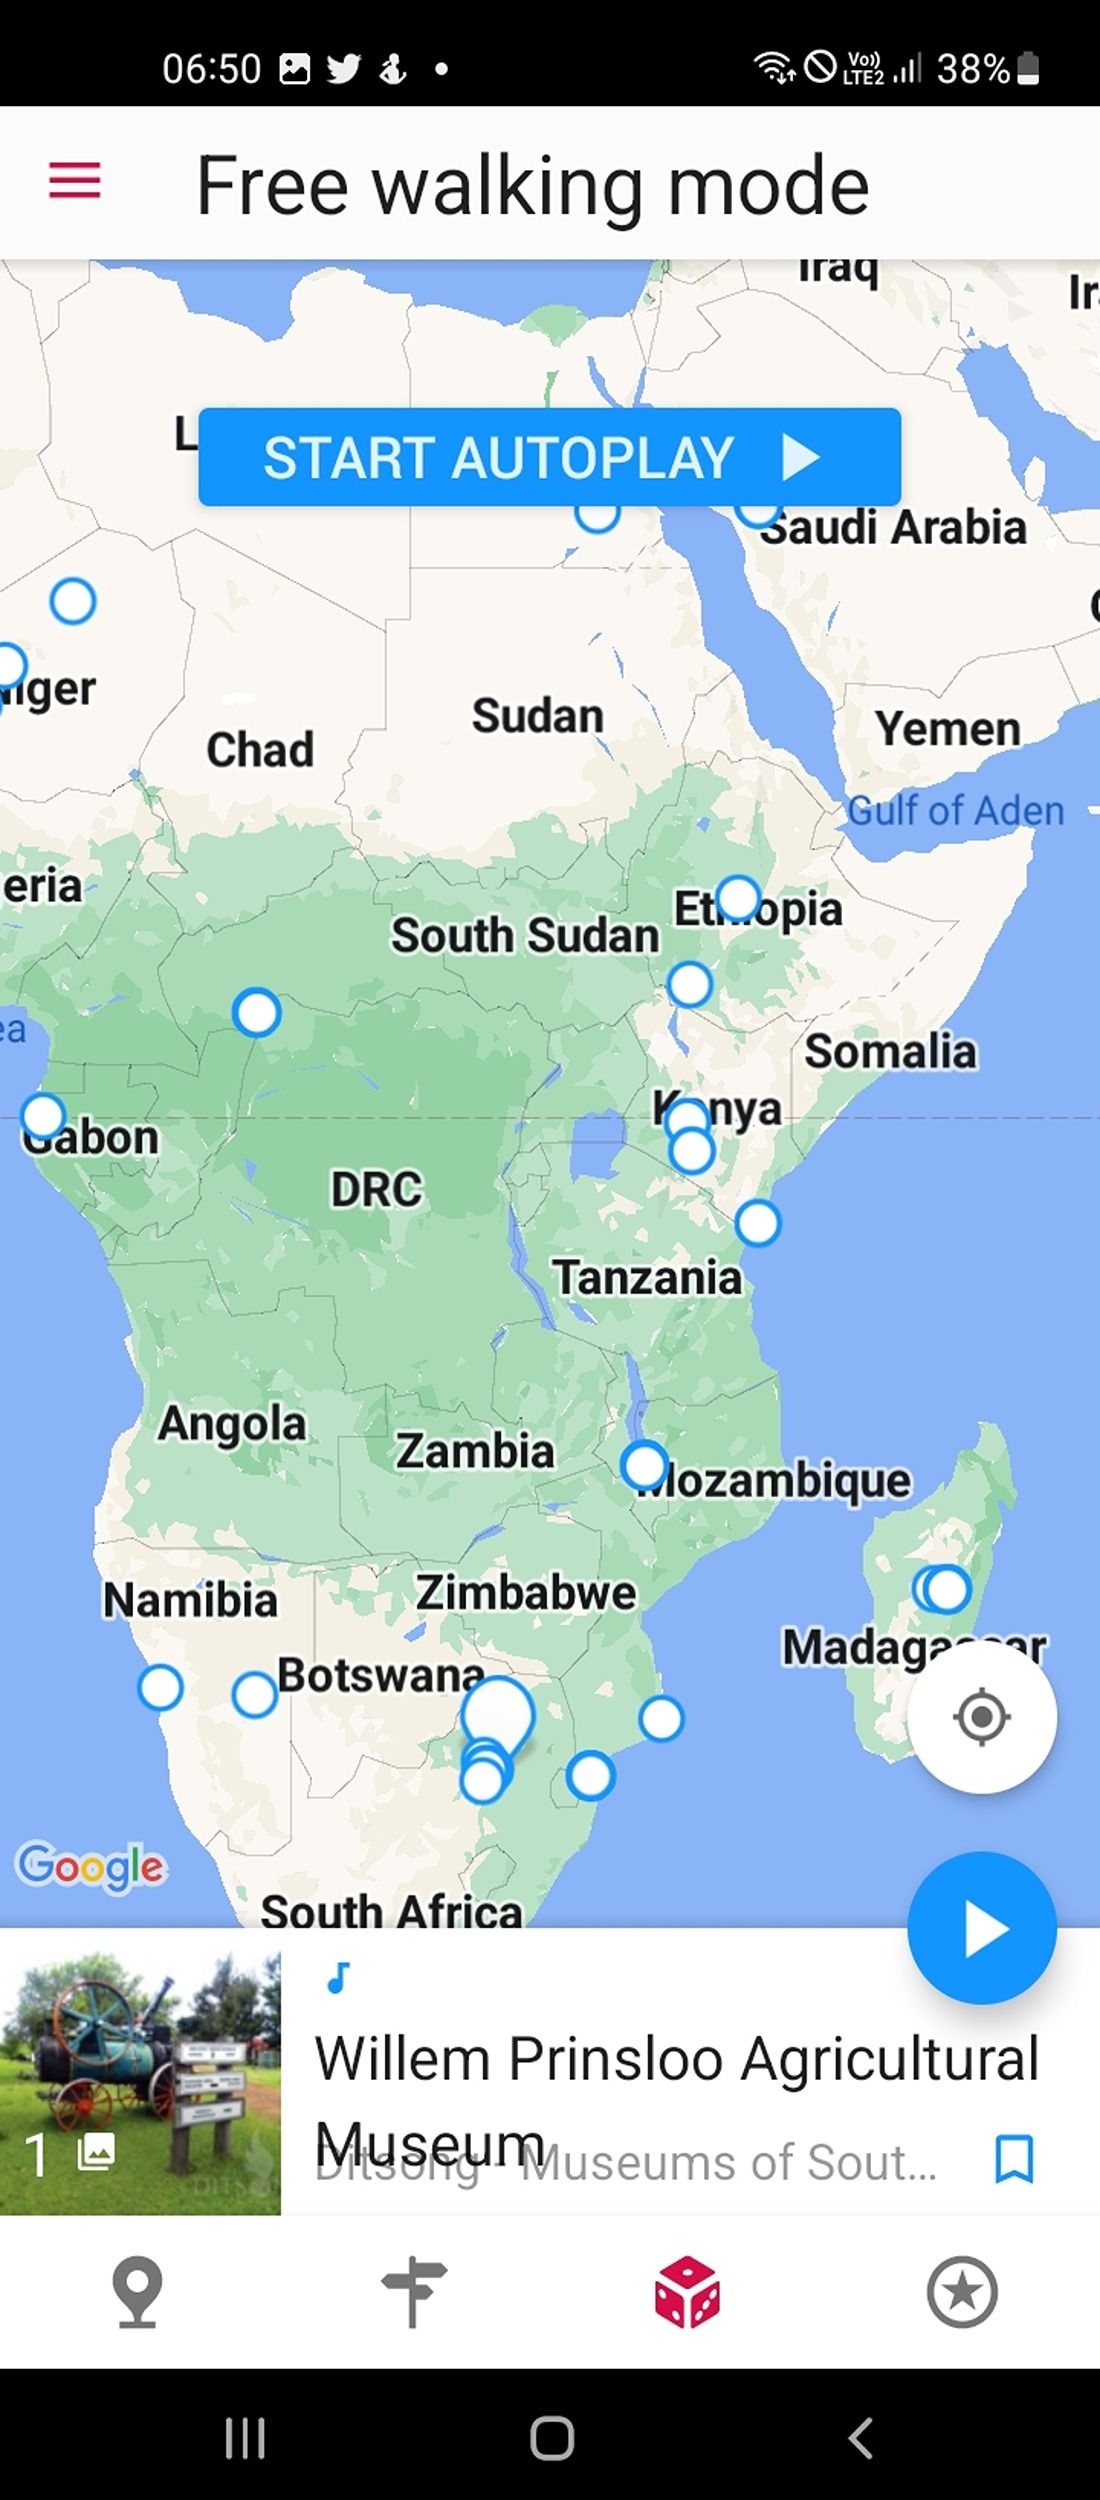 IZI Travel app's map view